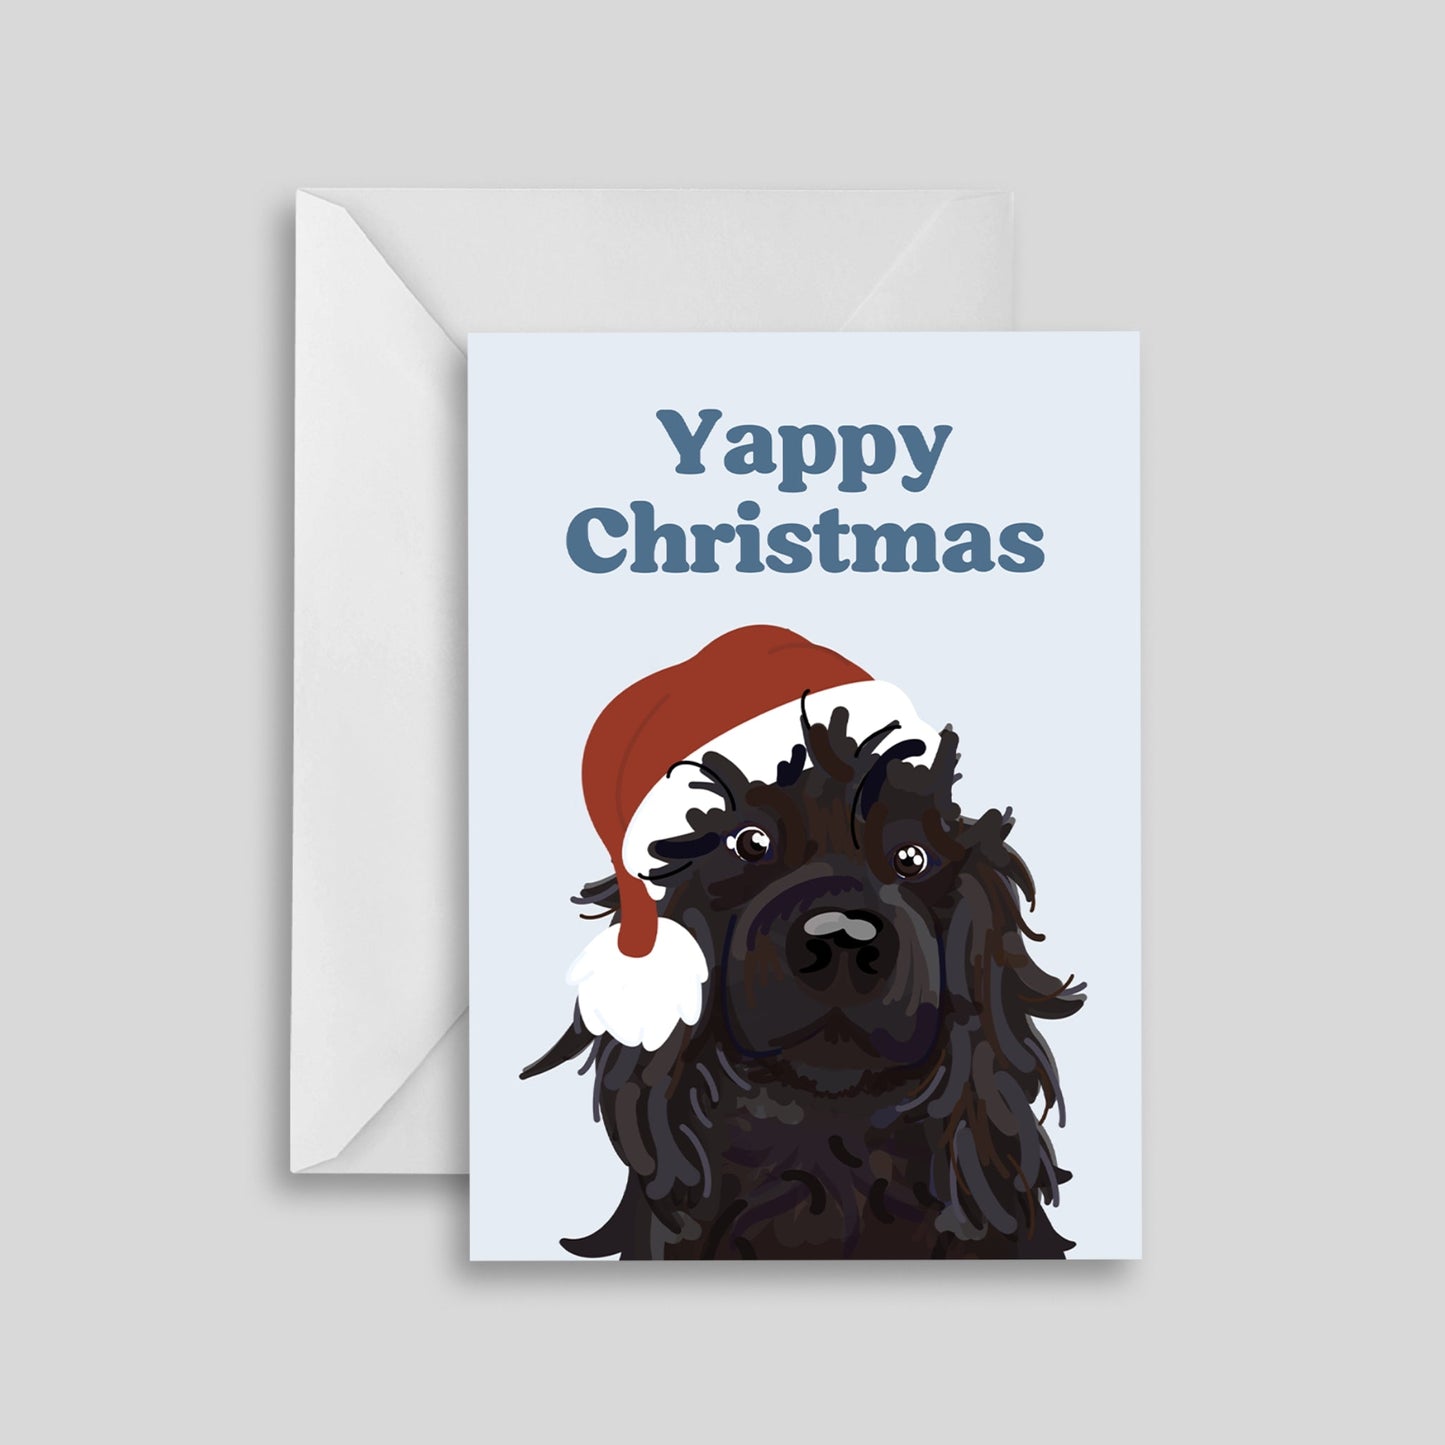 Wren & Rye Yappy Christmas (Santa Paws) Card Pack